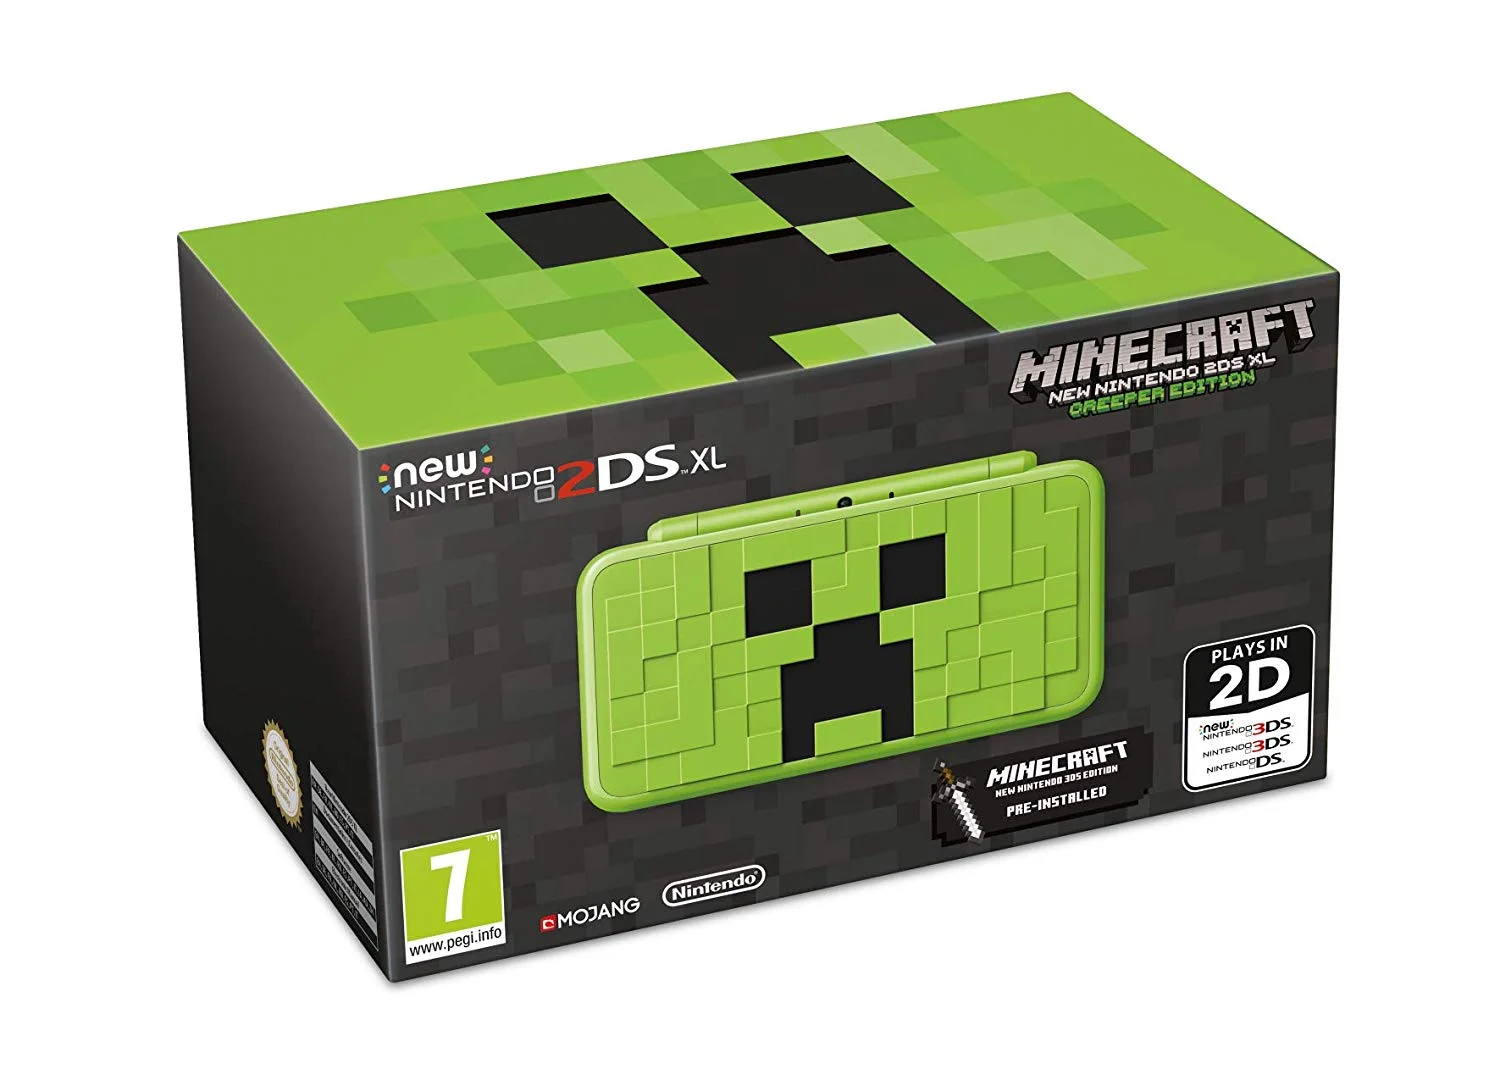 CV | New Nintendo 2DS XL Minecraft Creeper Console [EU]